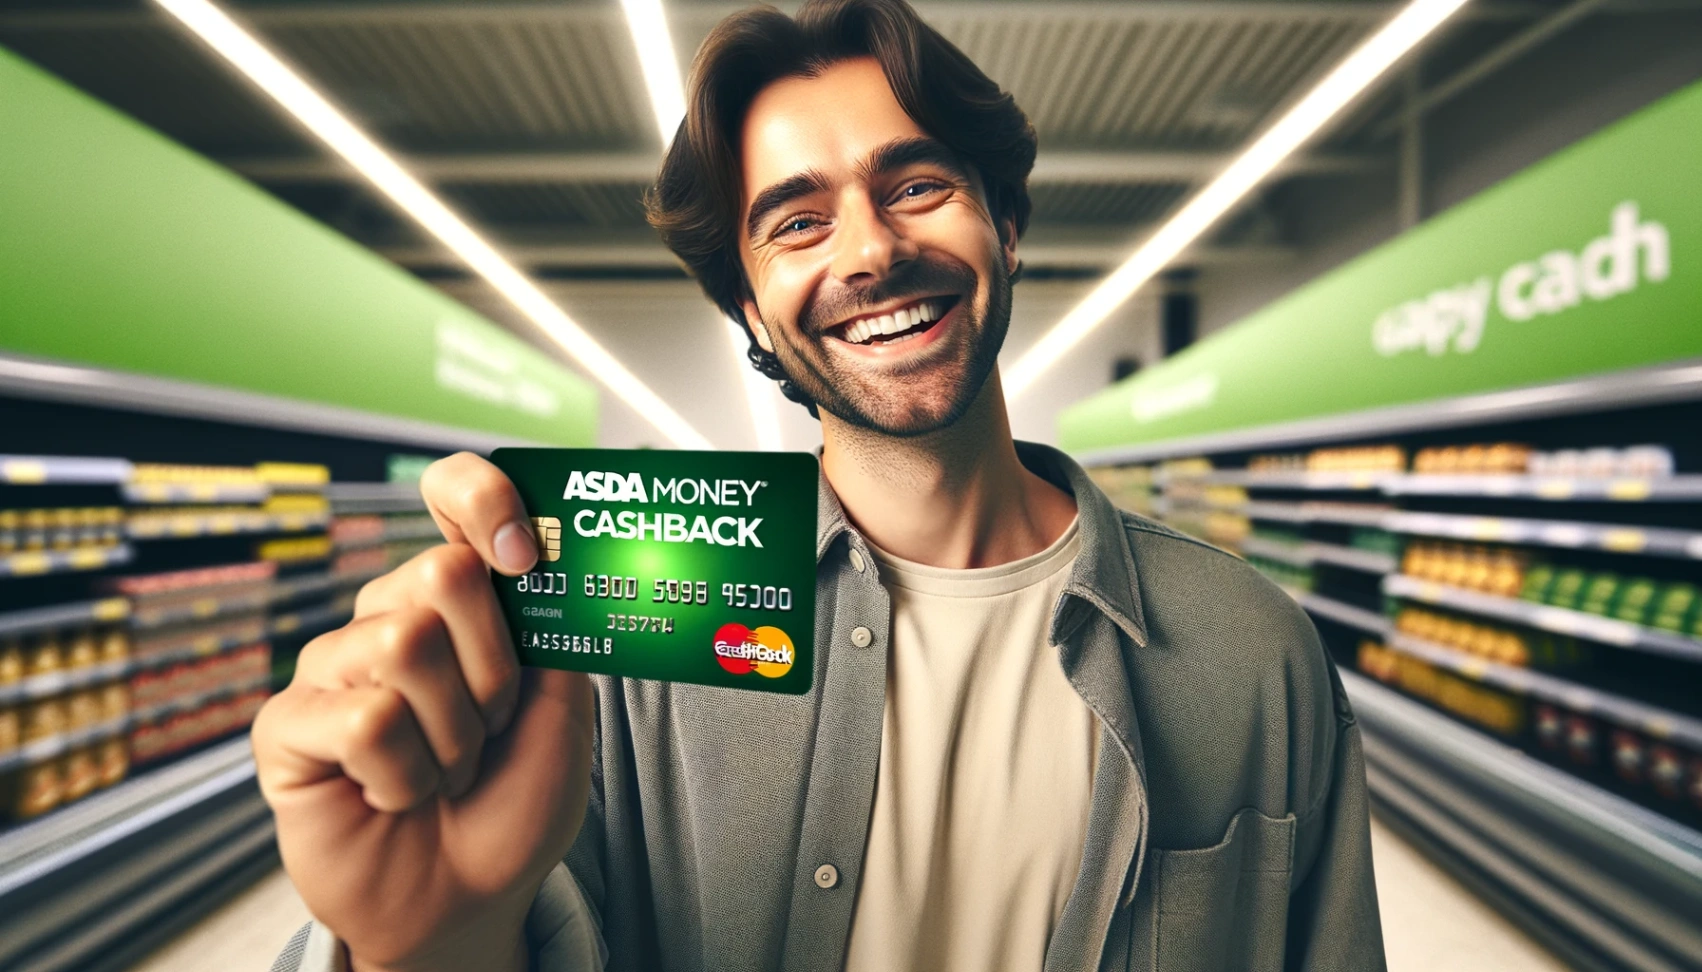 Asda Money Cashback Credit Card - How to Apply